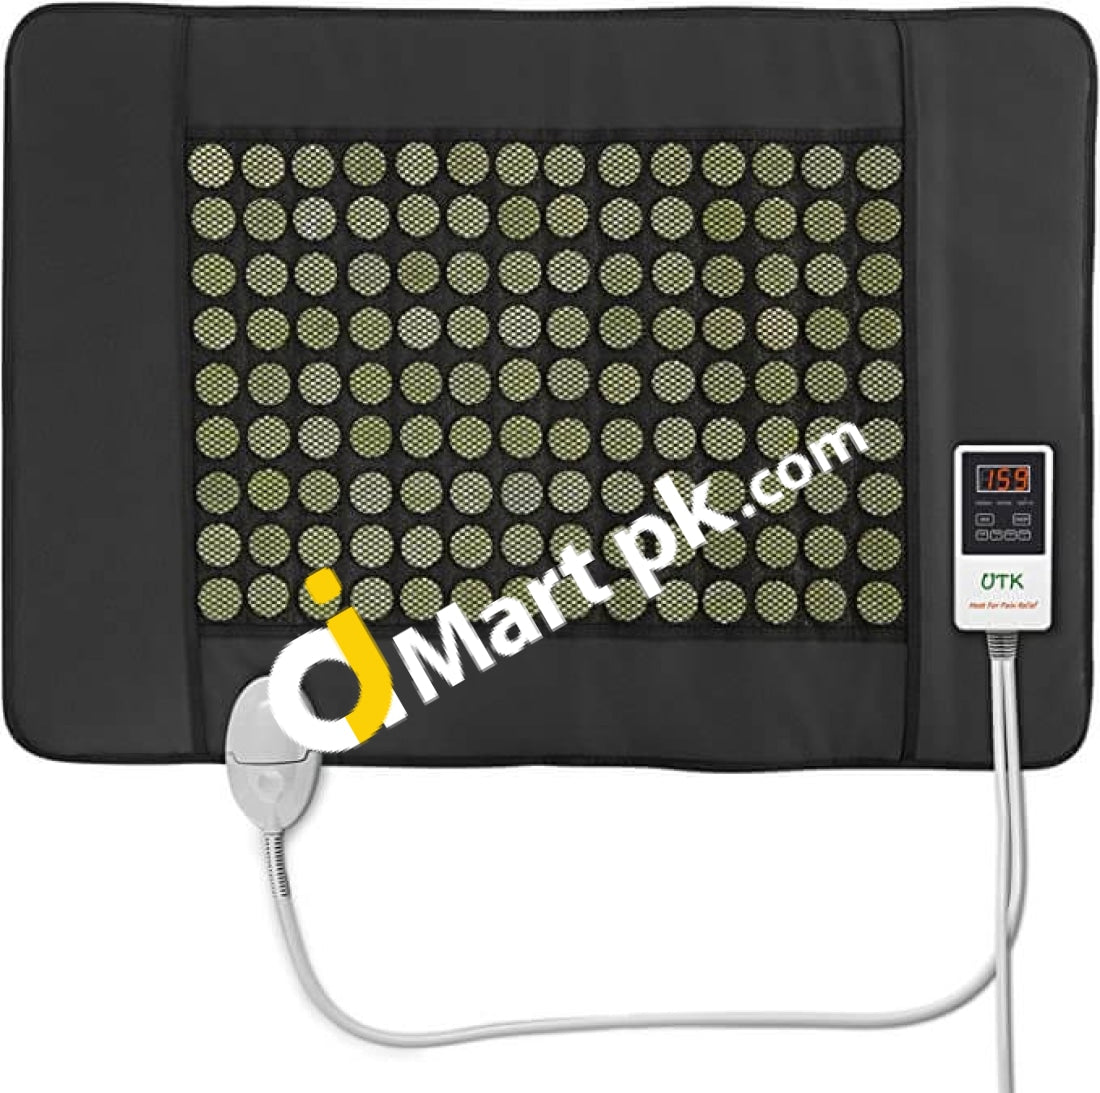 Grey electric heating pad, Size: 65 x 38cm, 6 heat settings